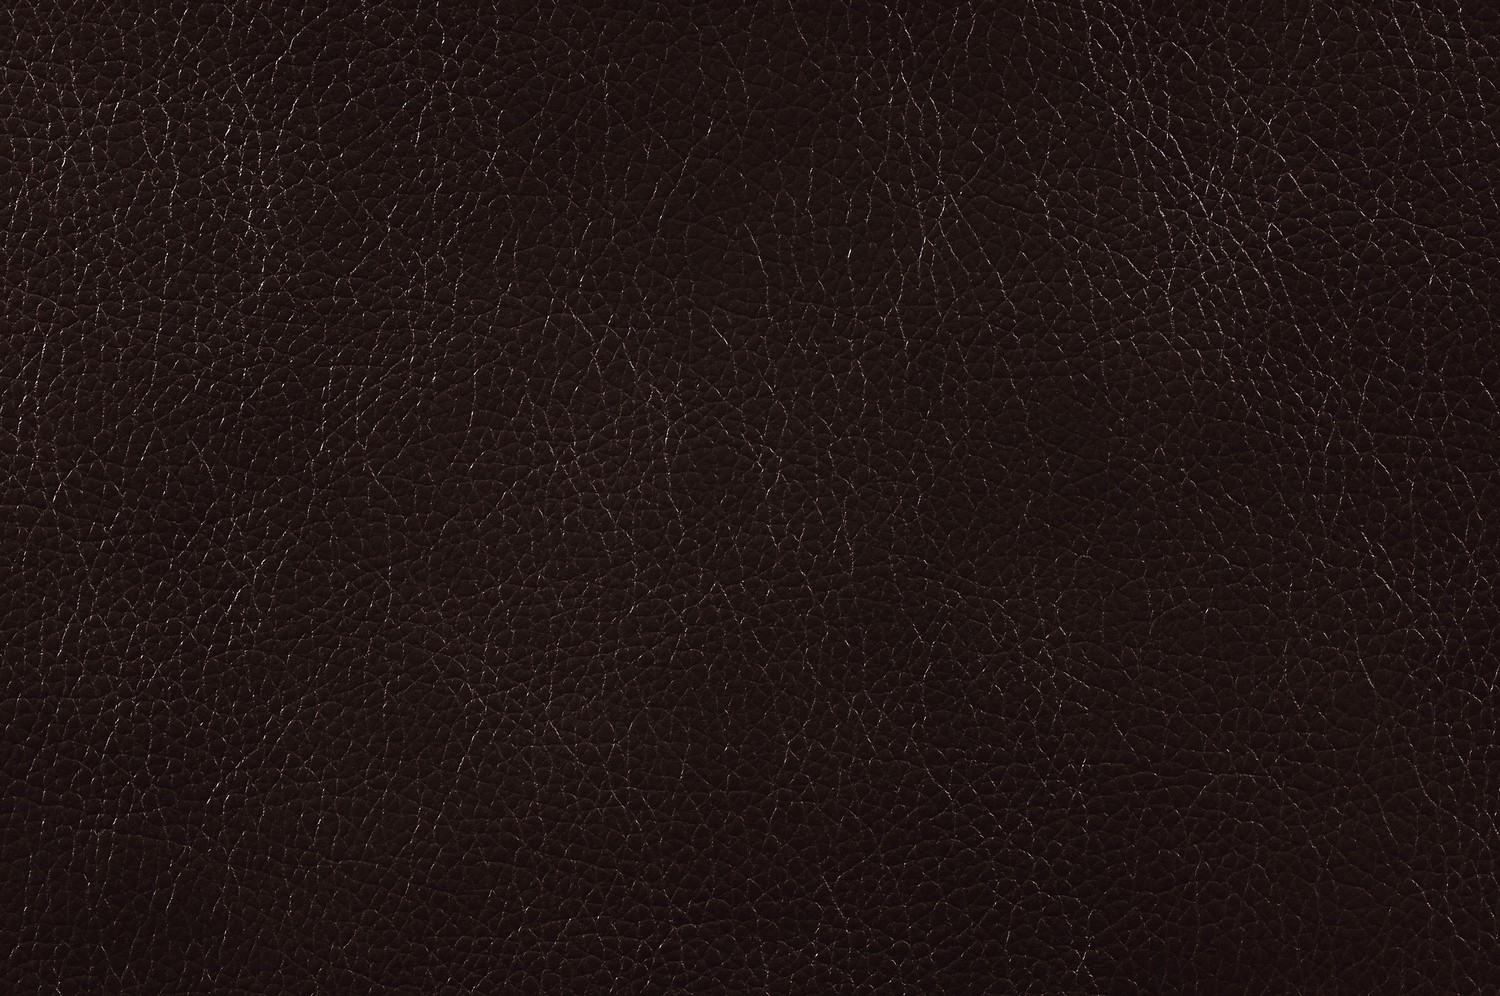 Homelegance Pecos Reclining Sofa Set - Leather Gel Match - Dark Brown